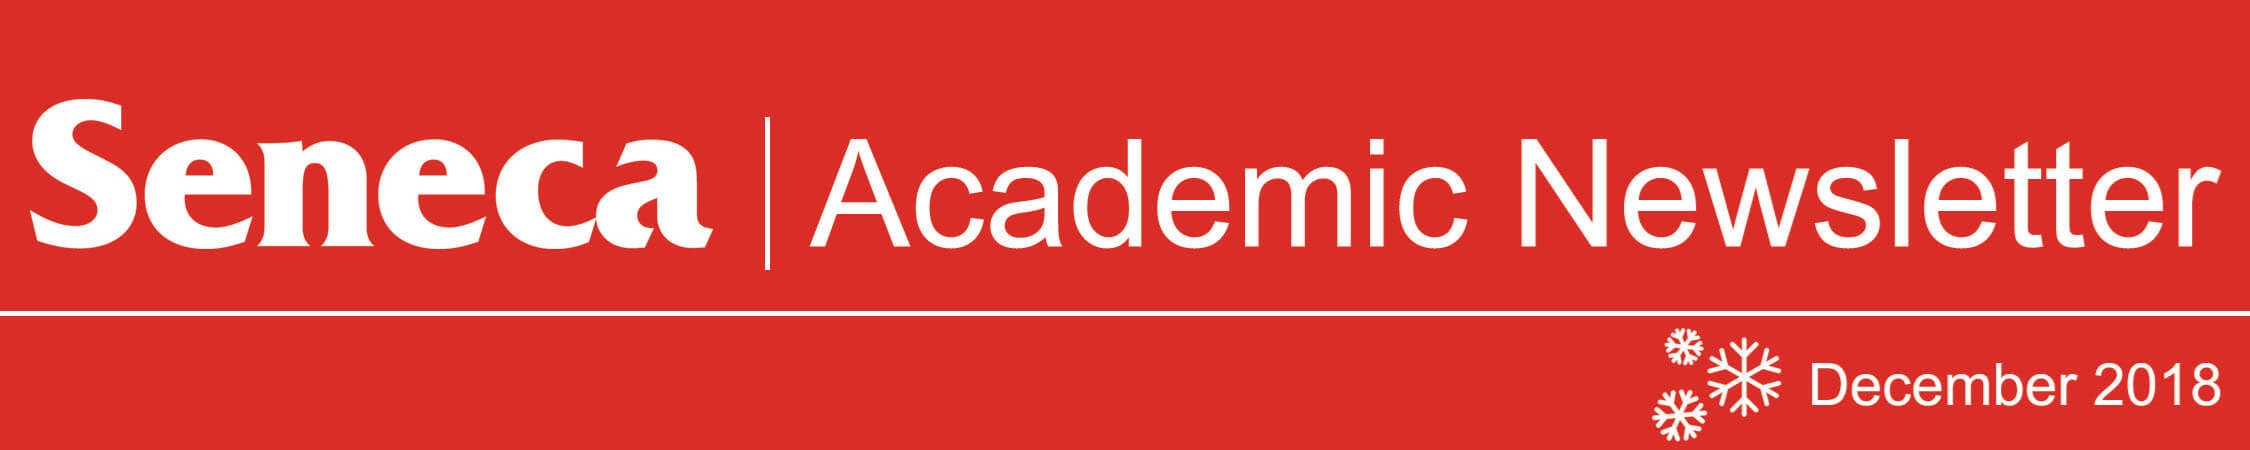 The header logo for the December 2018 issue of the Academic Newsletter